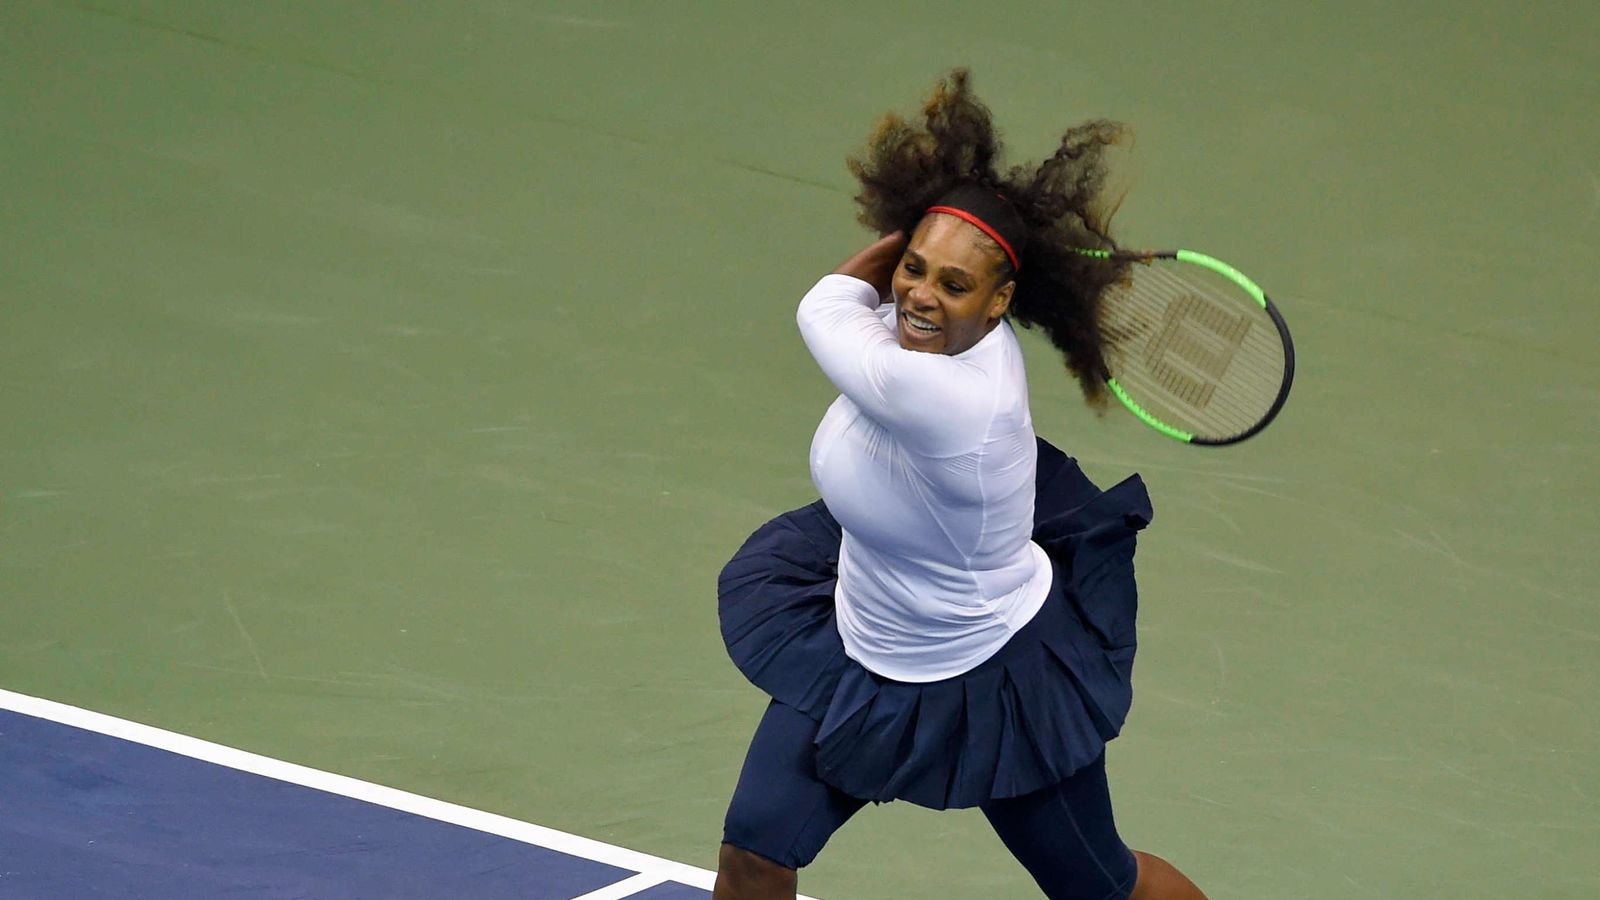 Serena Williams back on court with sister Venus after pregnancy break | US News | Sky News